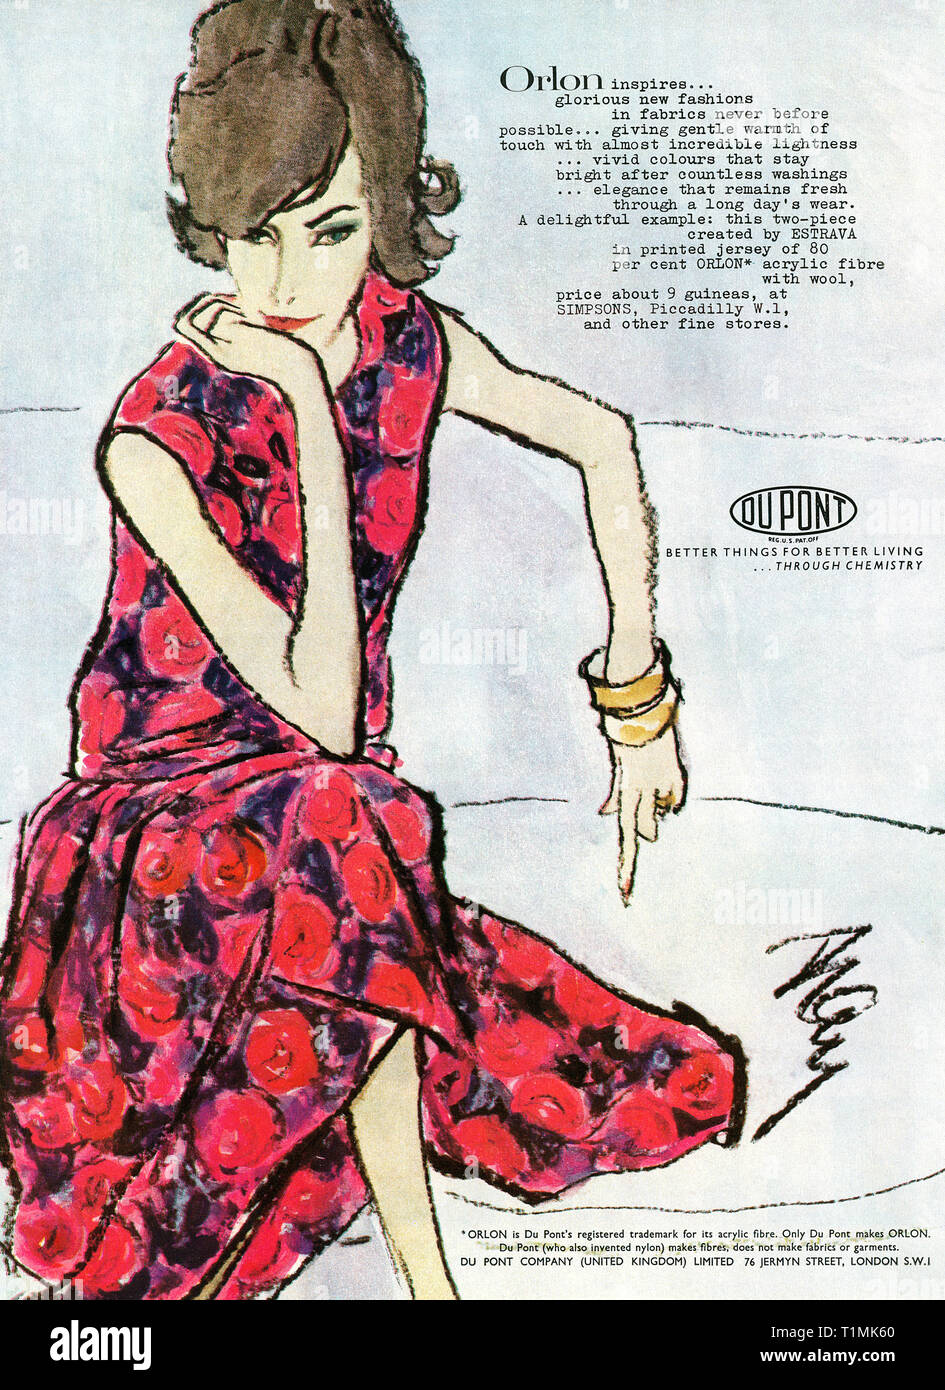 1962 British advertisement for Orlon fashion fabric by Du Pont. Stock Photo